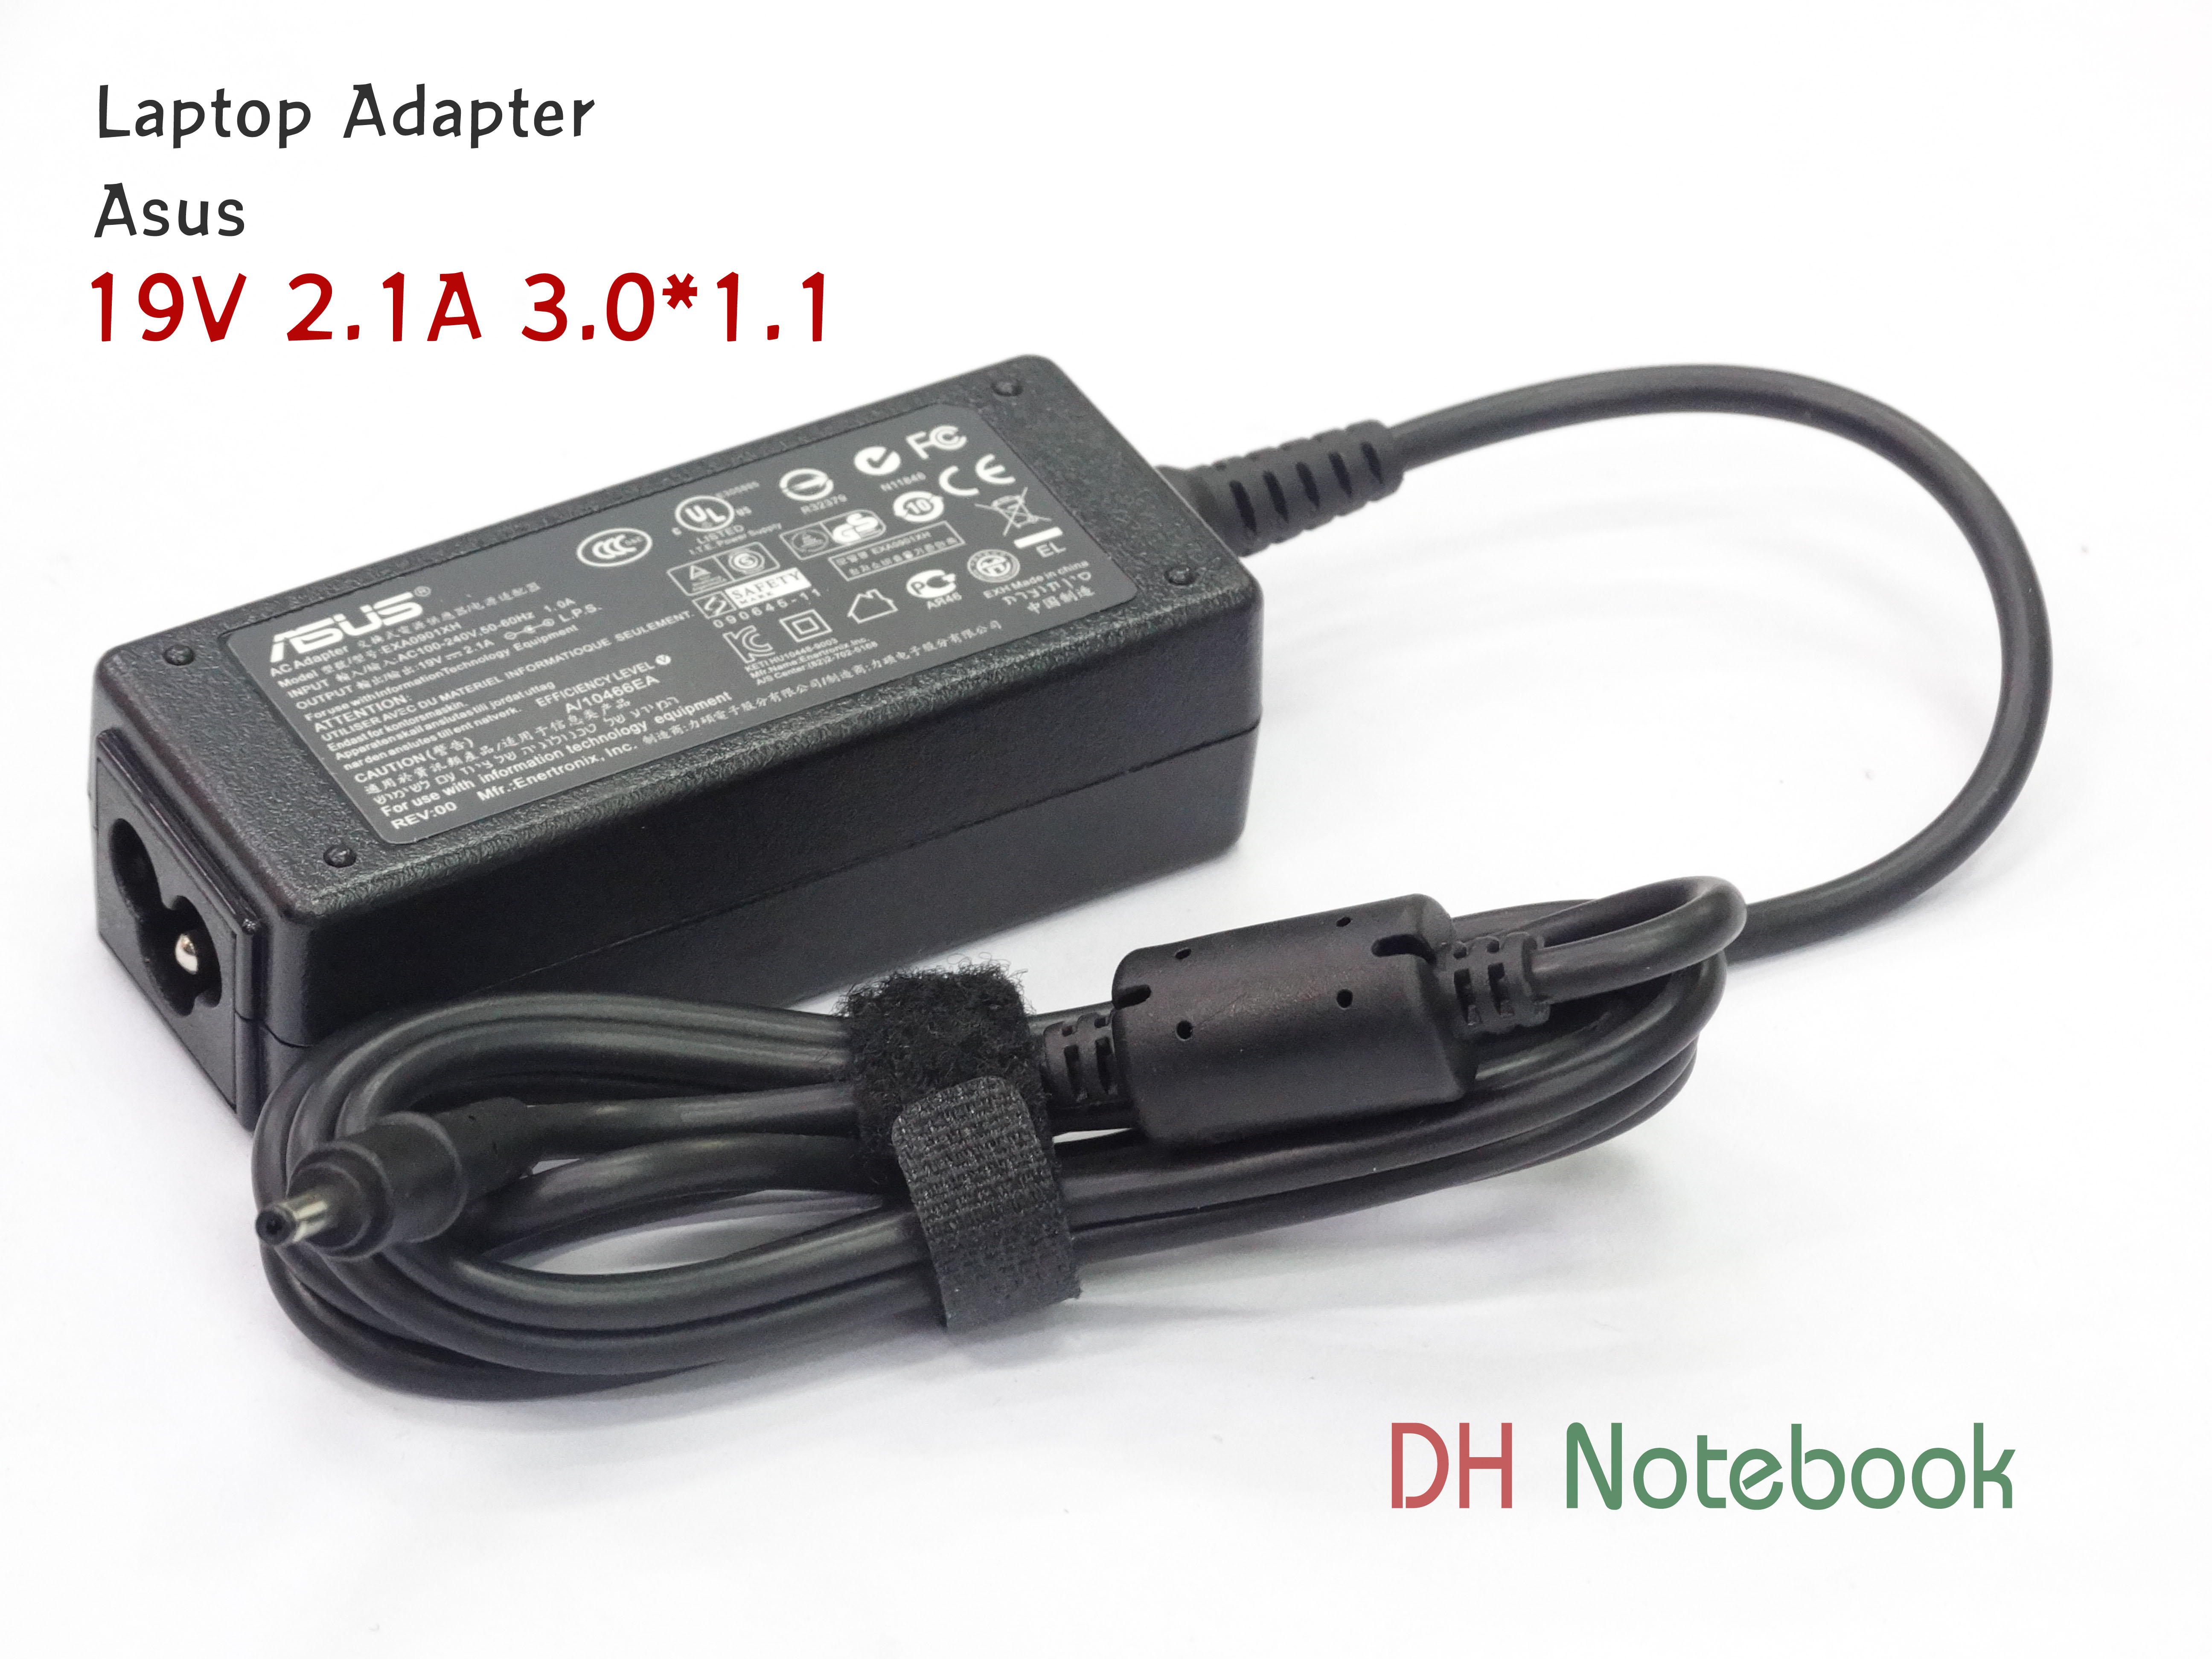 Adapter ASUS 19V 2.1A (3.0*1.1)